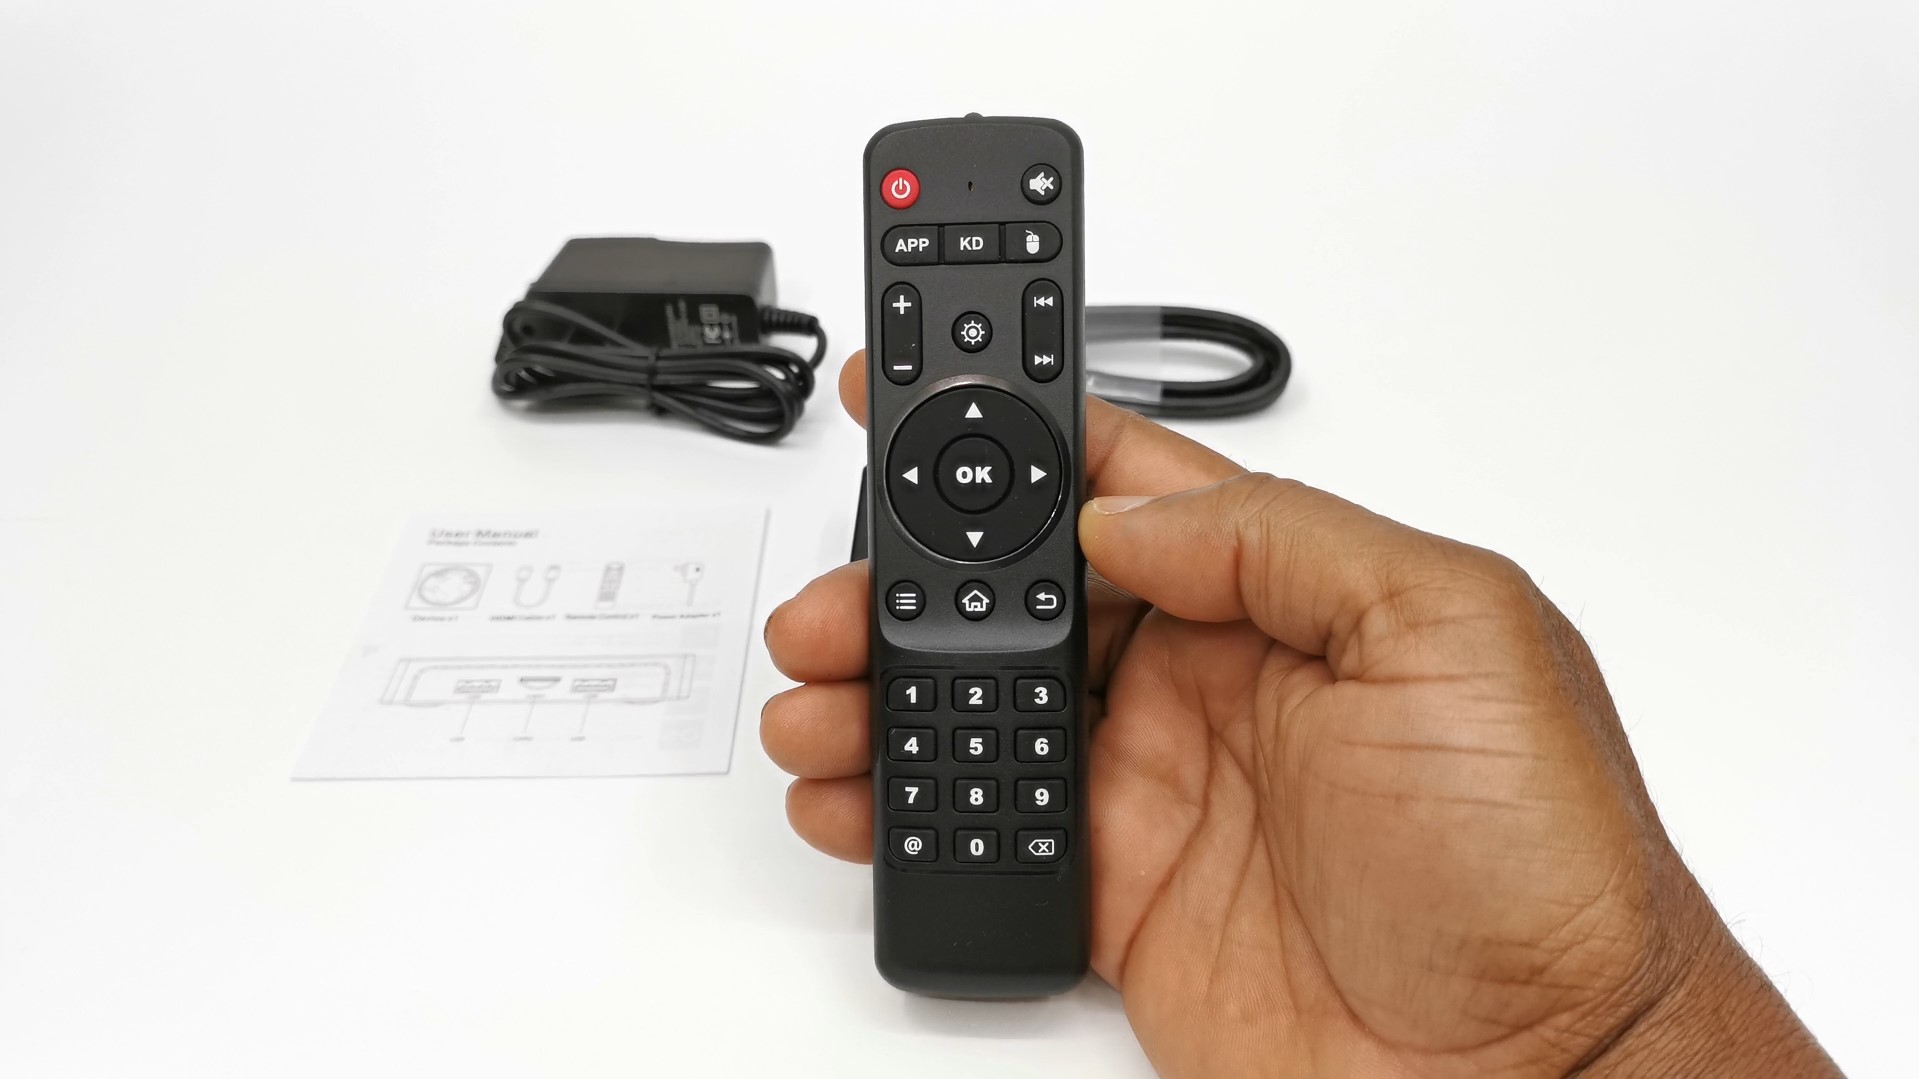 X98 Mini S905W2 IR remote control